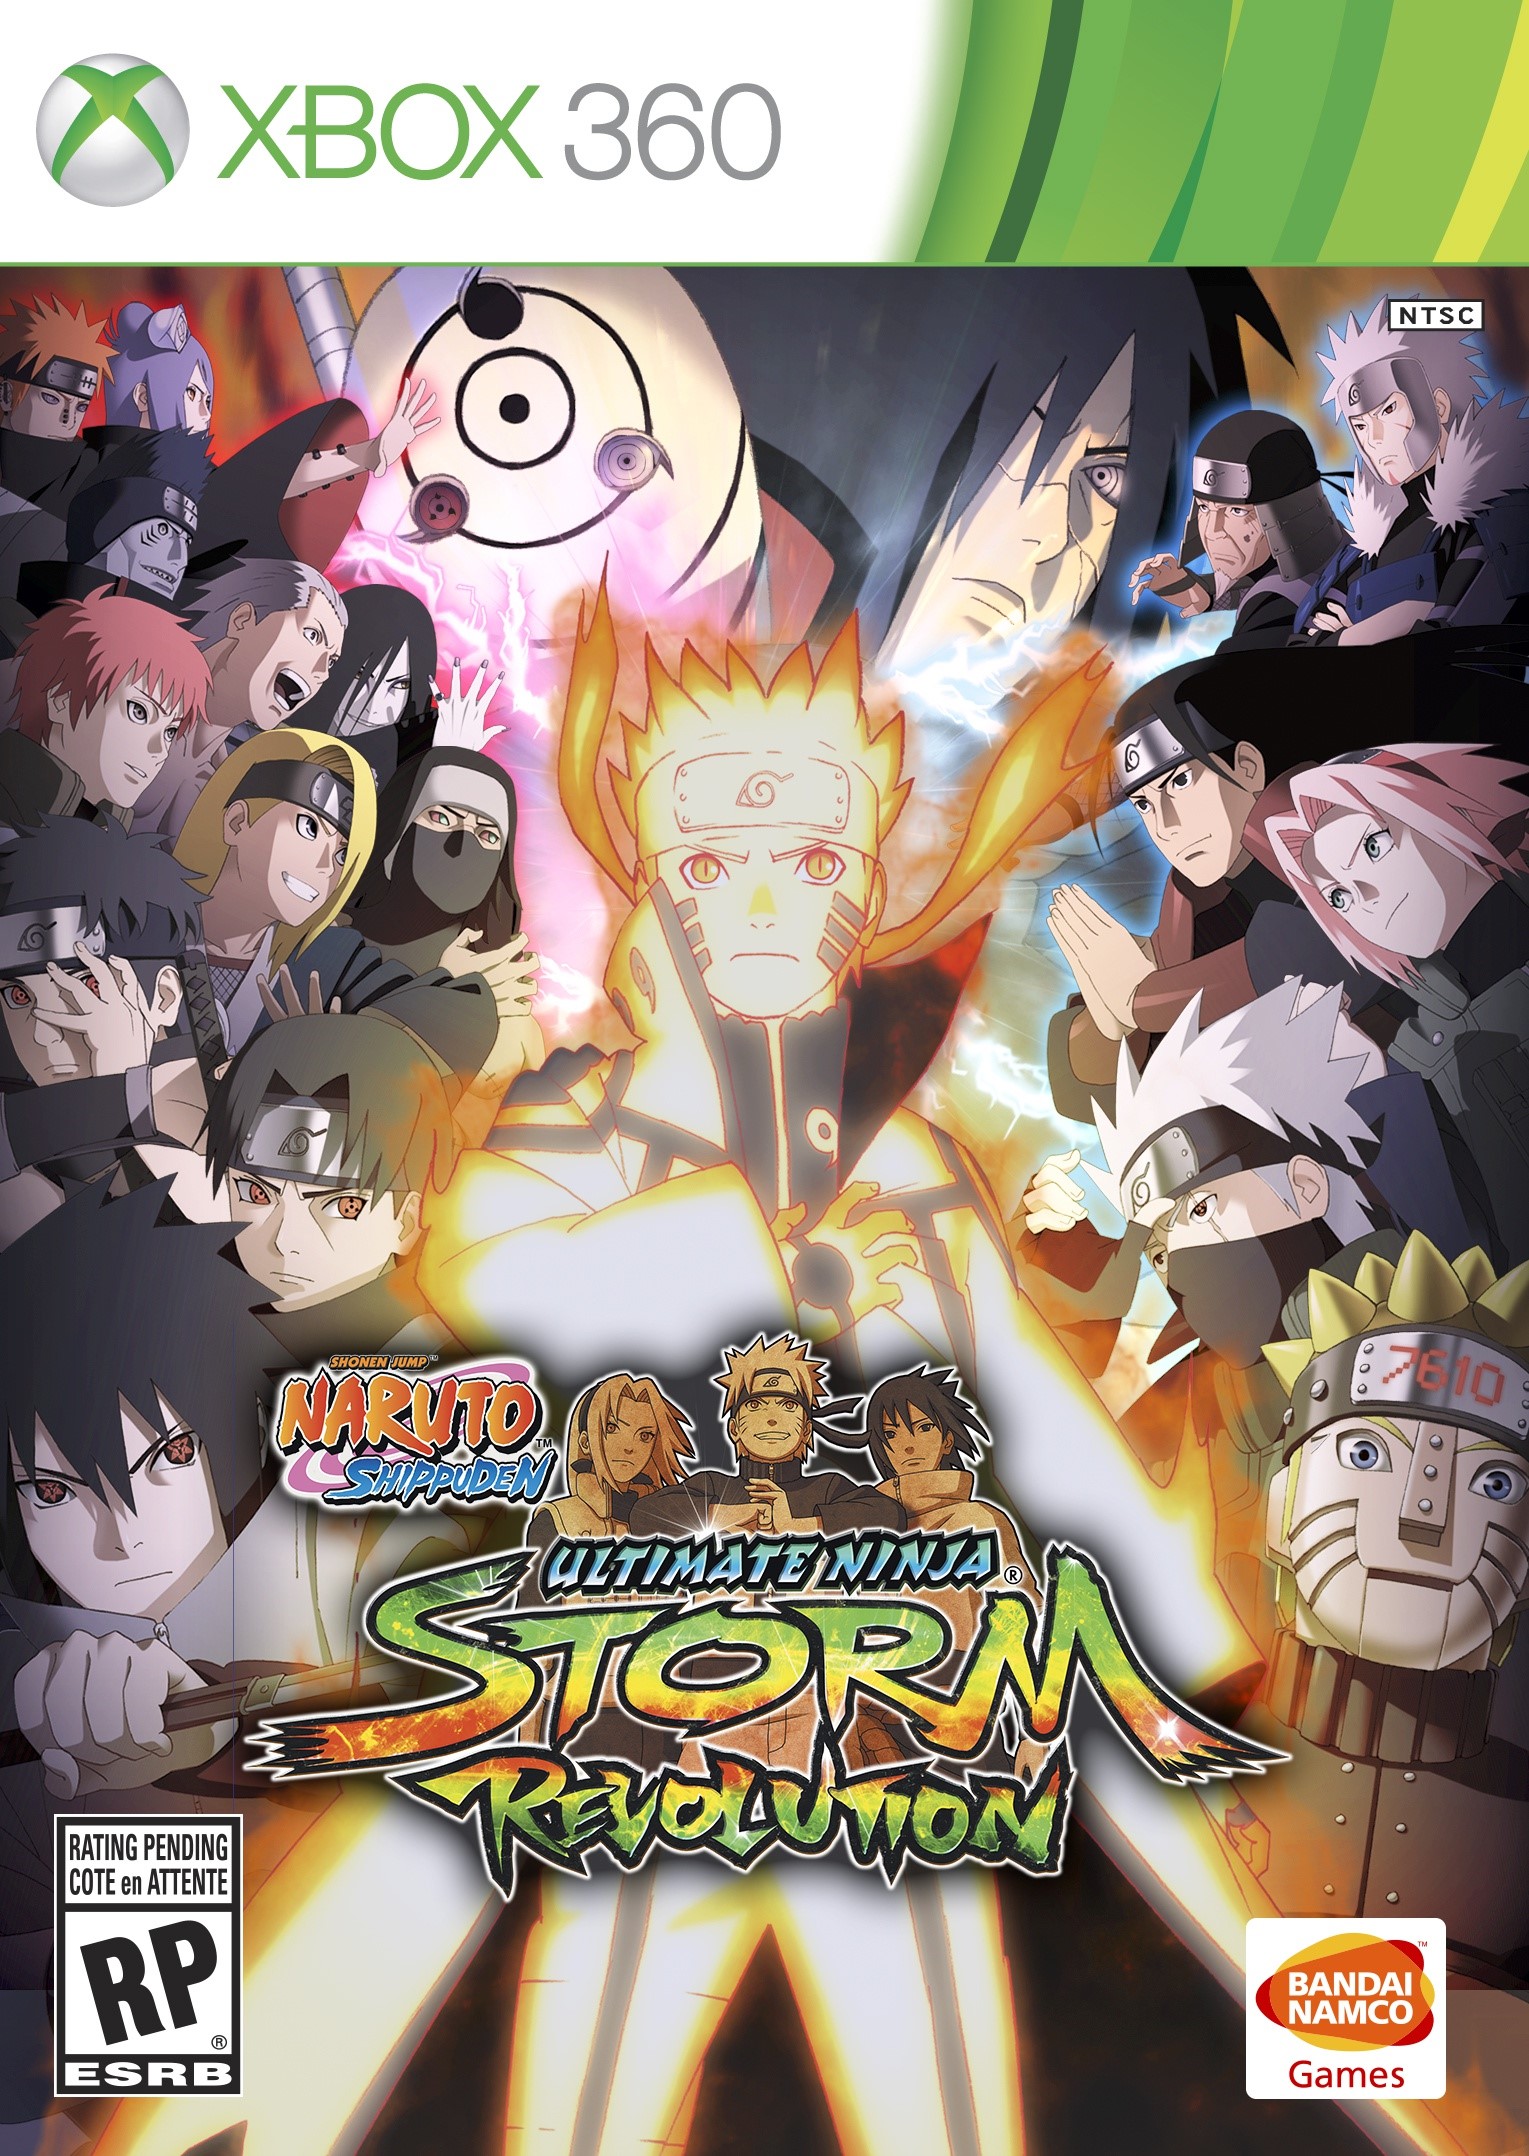 Обложка XBOX 360 |40| Naruto Storm R + Street Fighter IV + 6